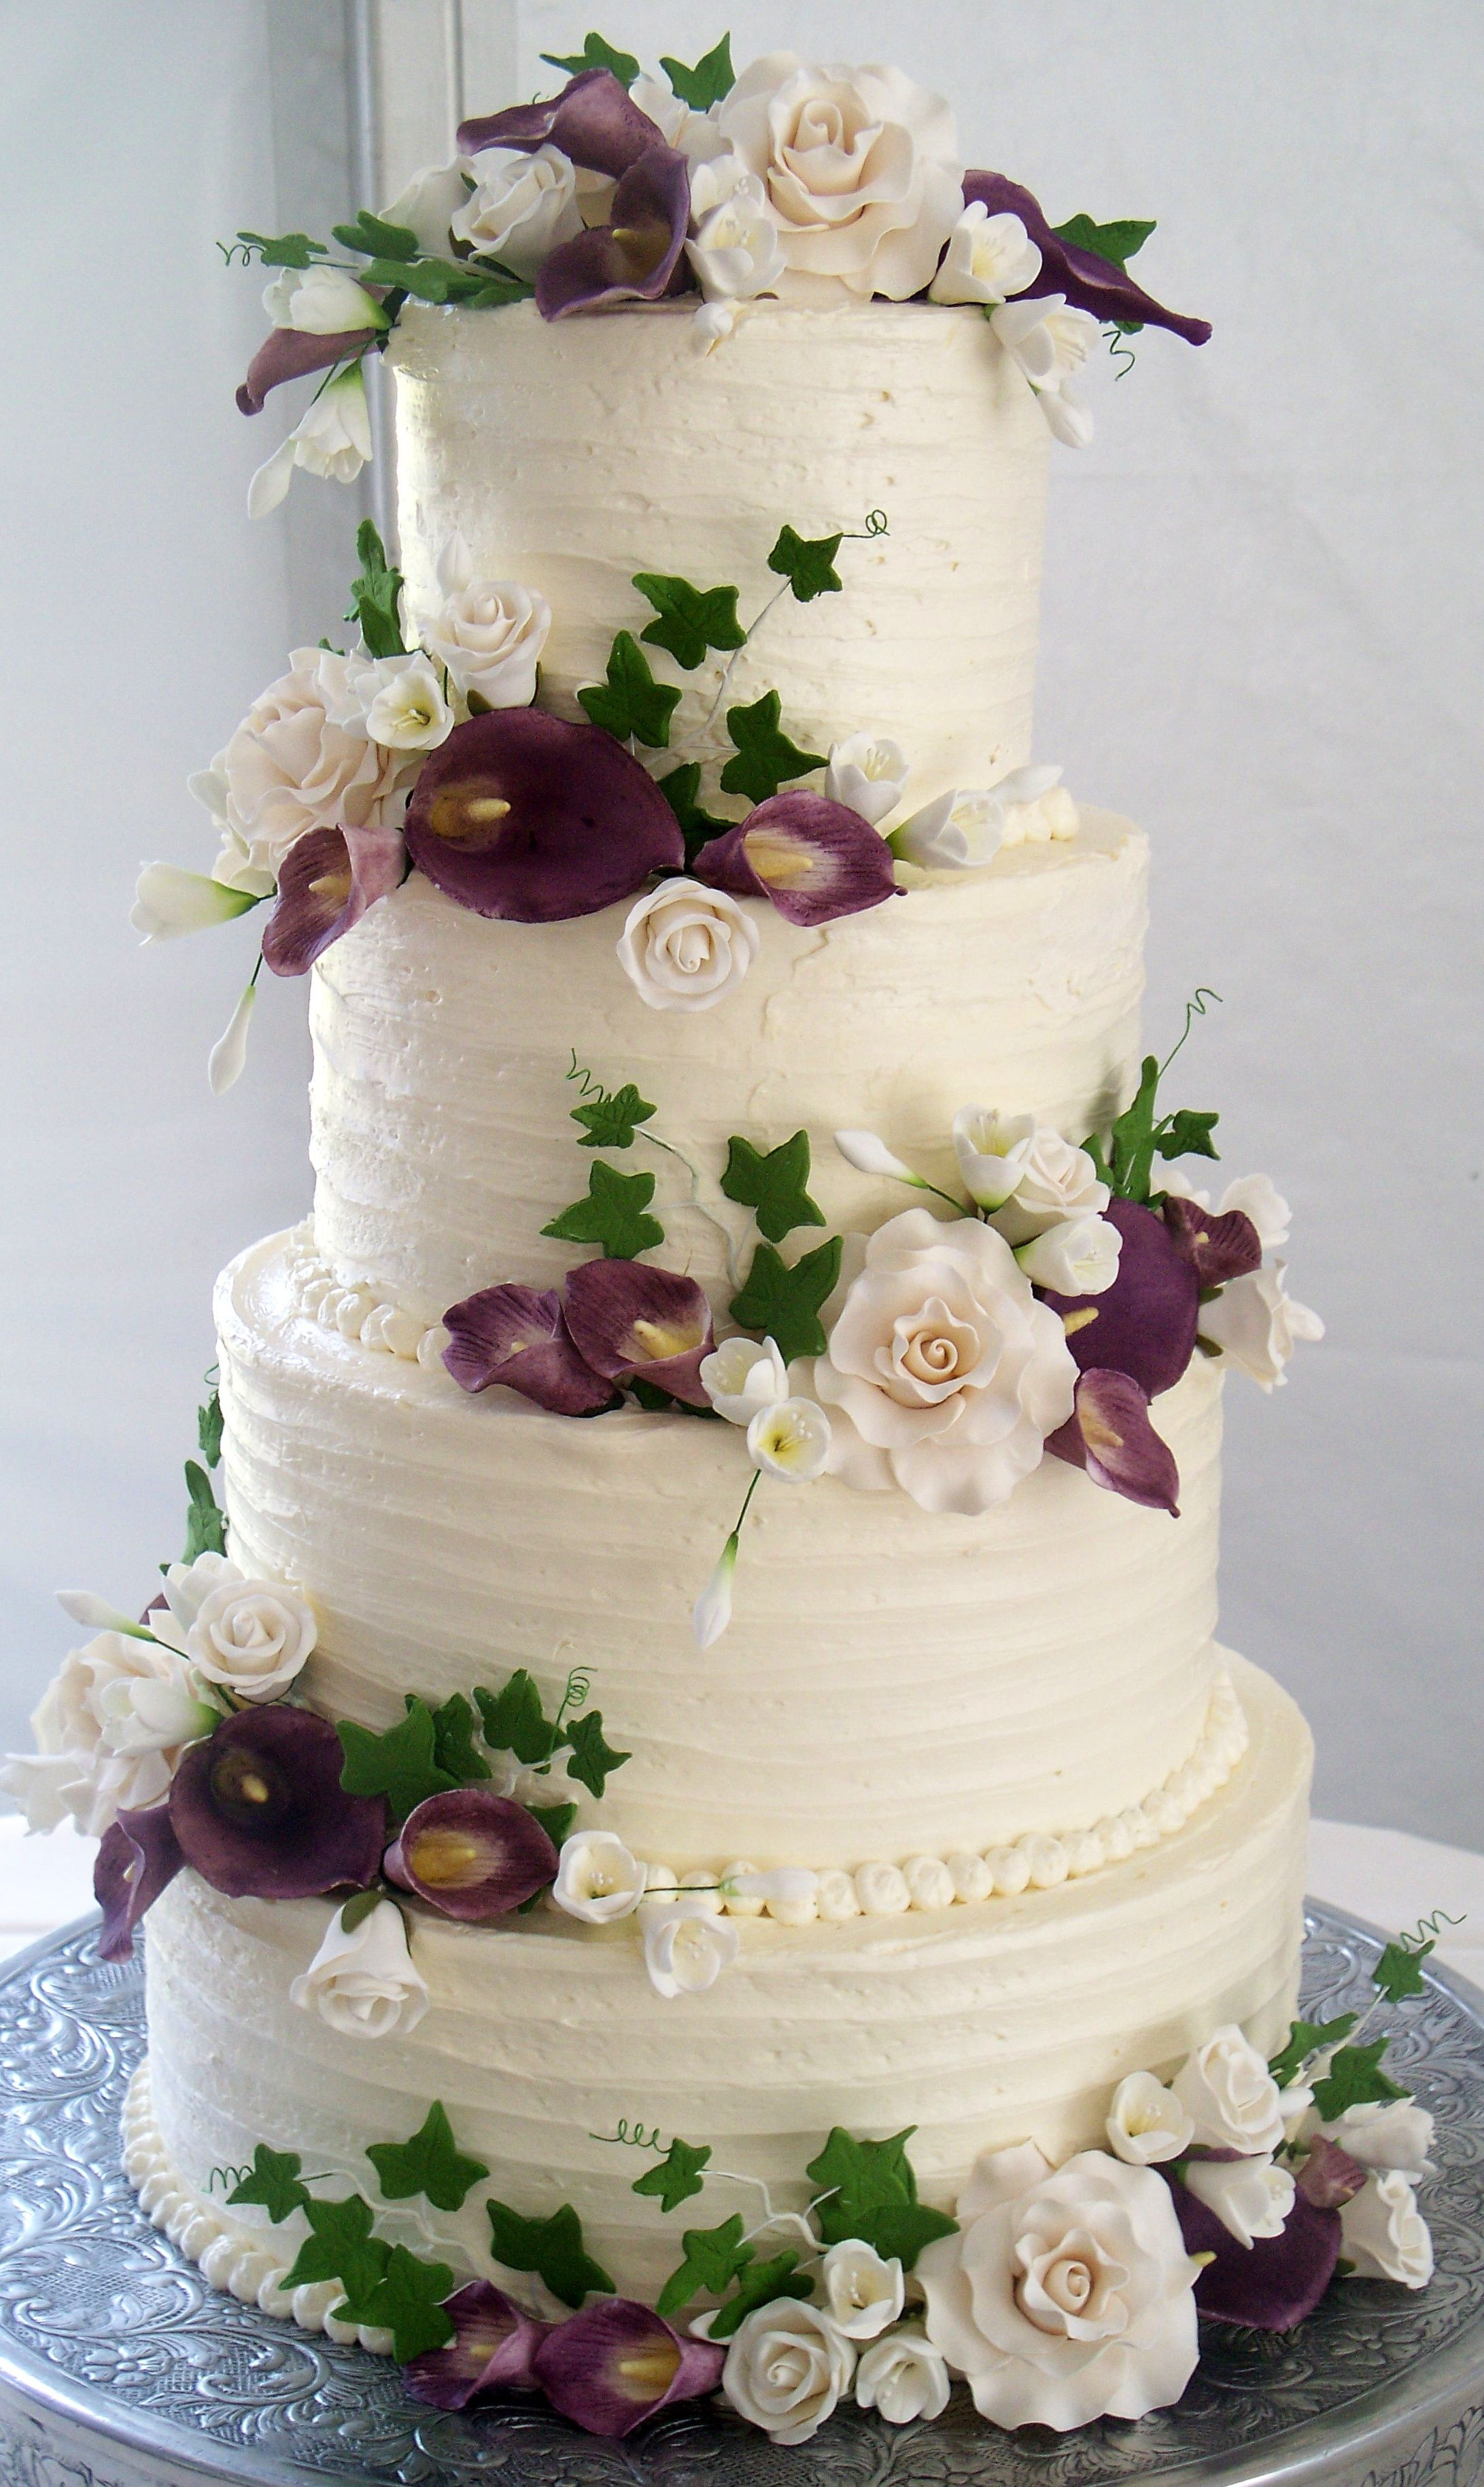 4 Tier Wedding Cakes
 4 tier wedding cake textured buttercream and coordinating